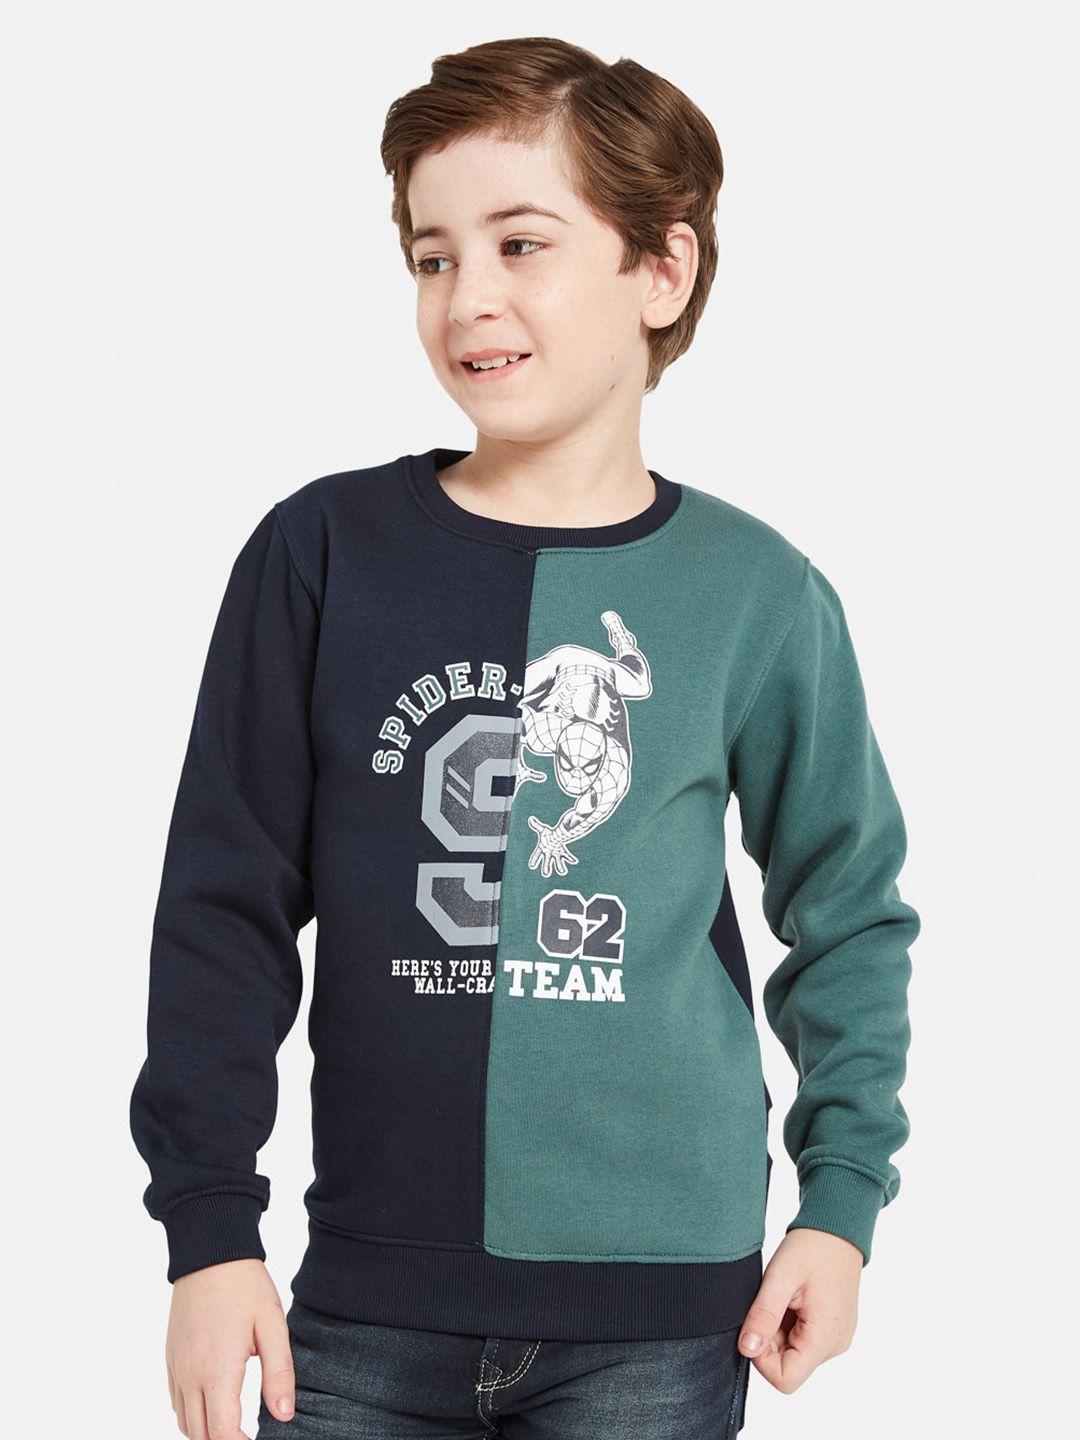 octave boys graphic printed sweatshirt